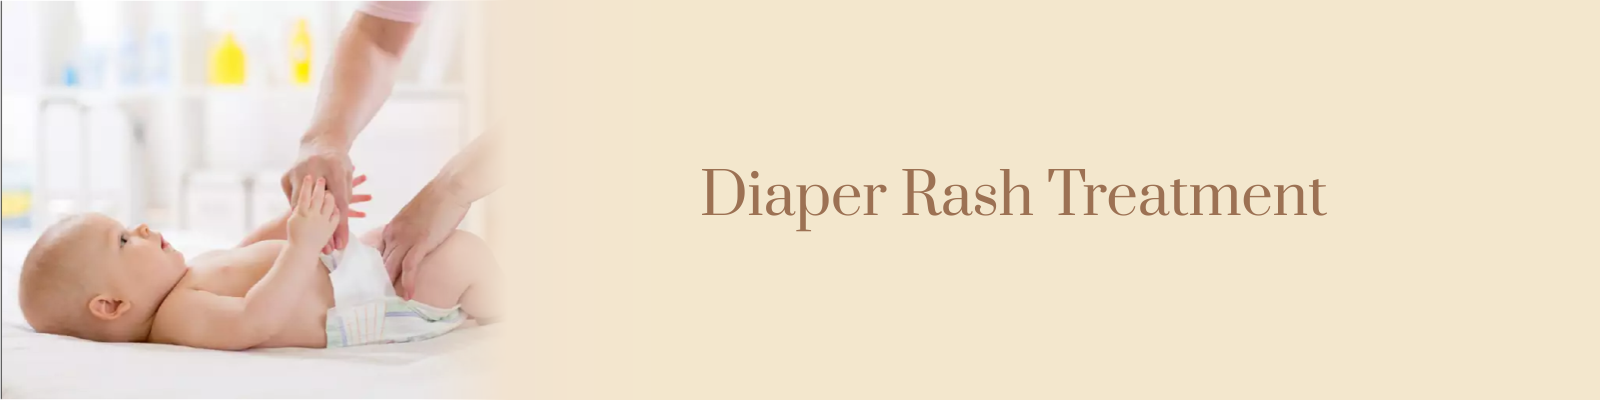 Diaper Rash Treatment in Delhi